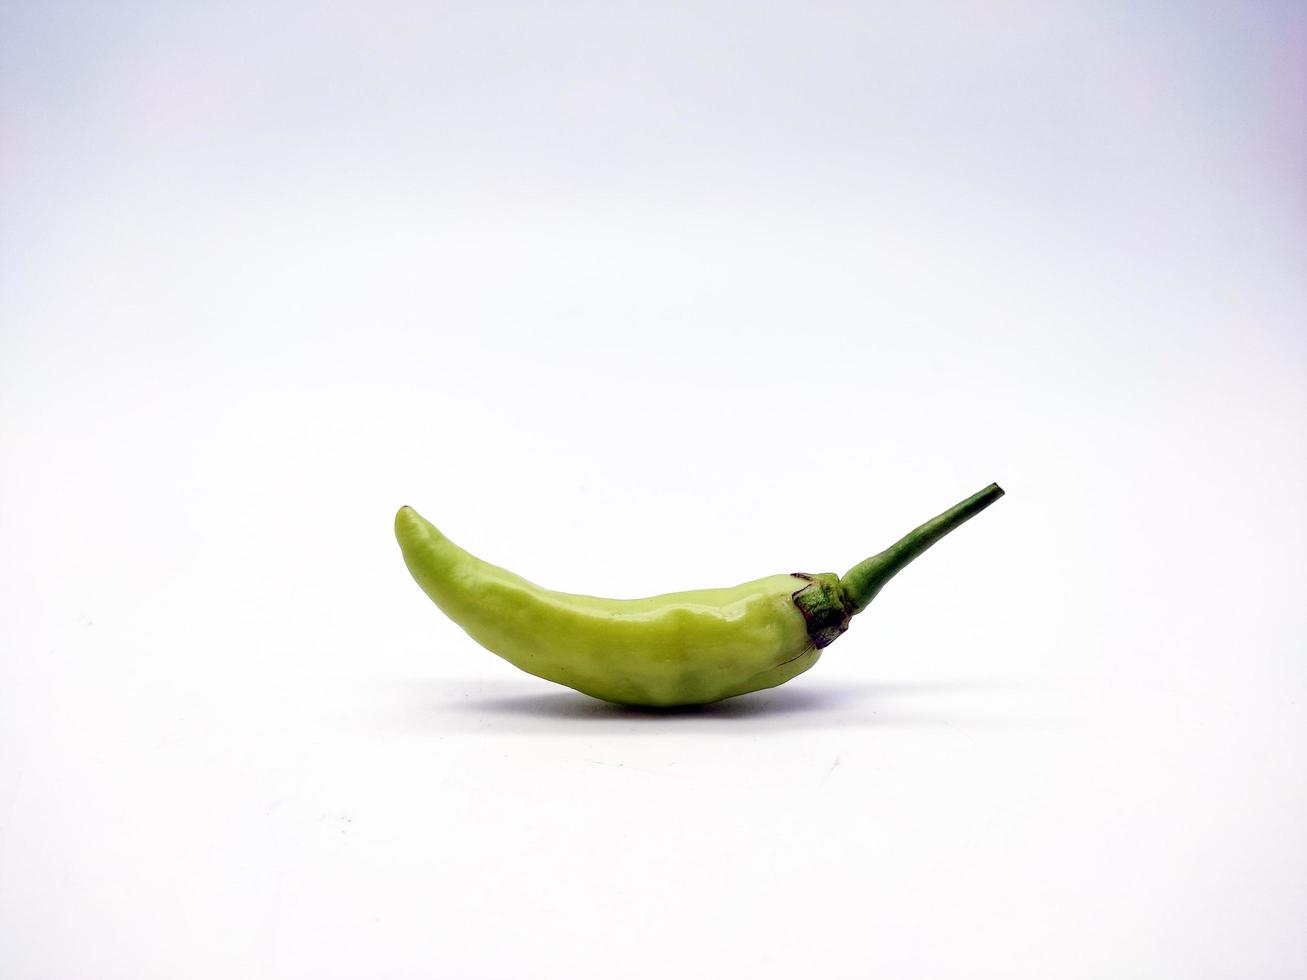 licht groen Chili peper geïsoleerd Aan wit achtergrond foto